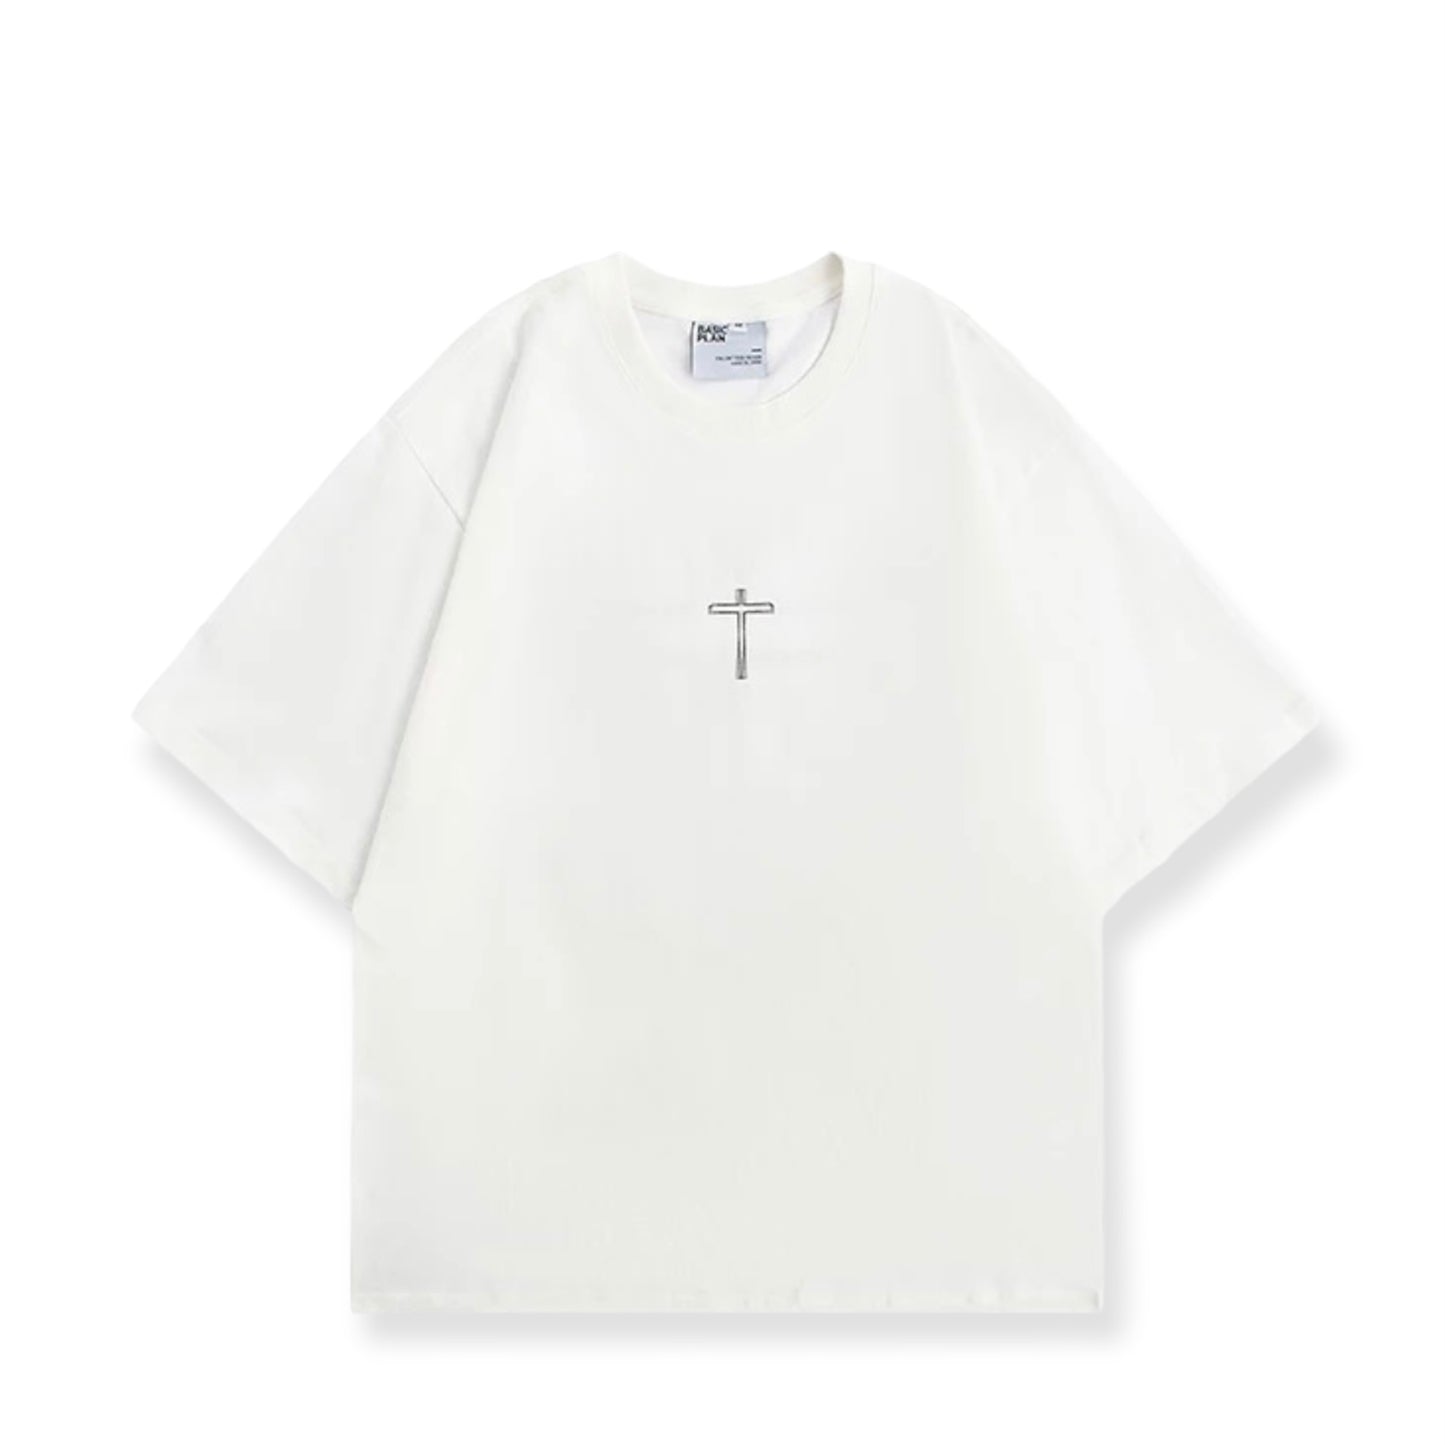 Basic Plan Cross Streetwear Unisex T-shirt